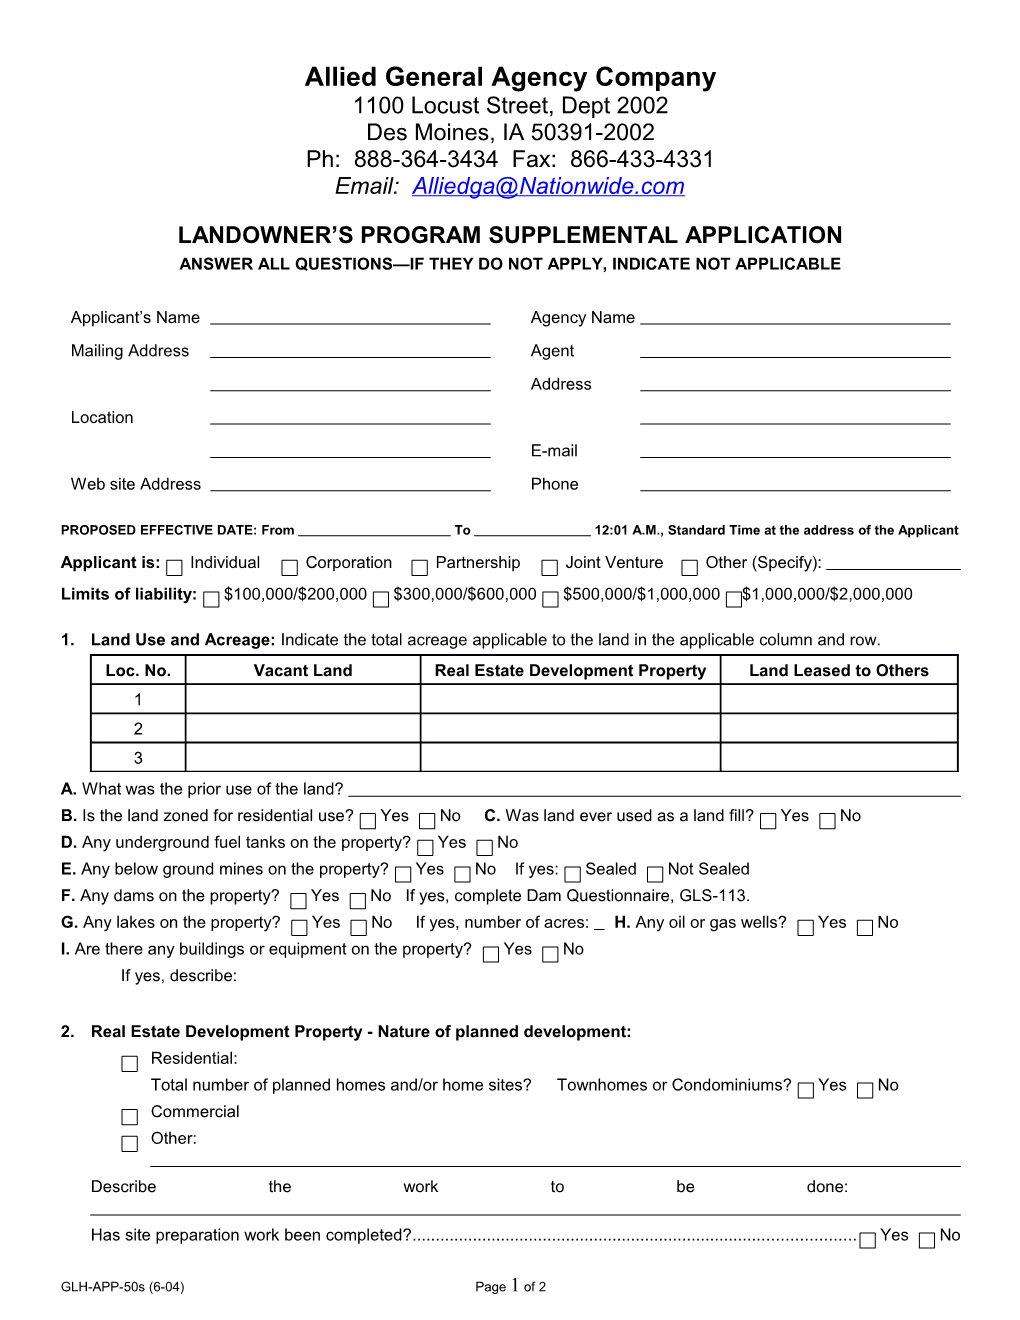 Landowners Program Supplemental App